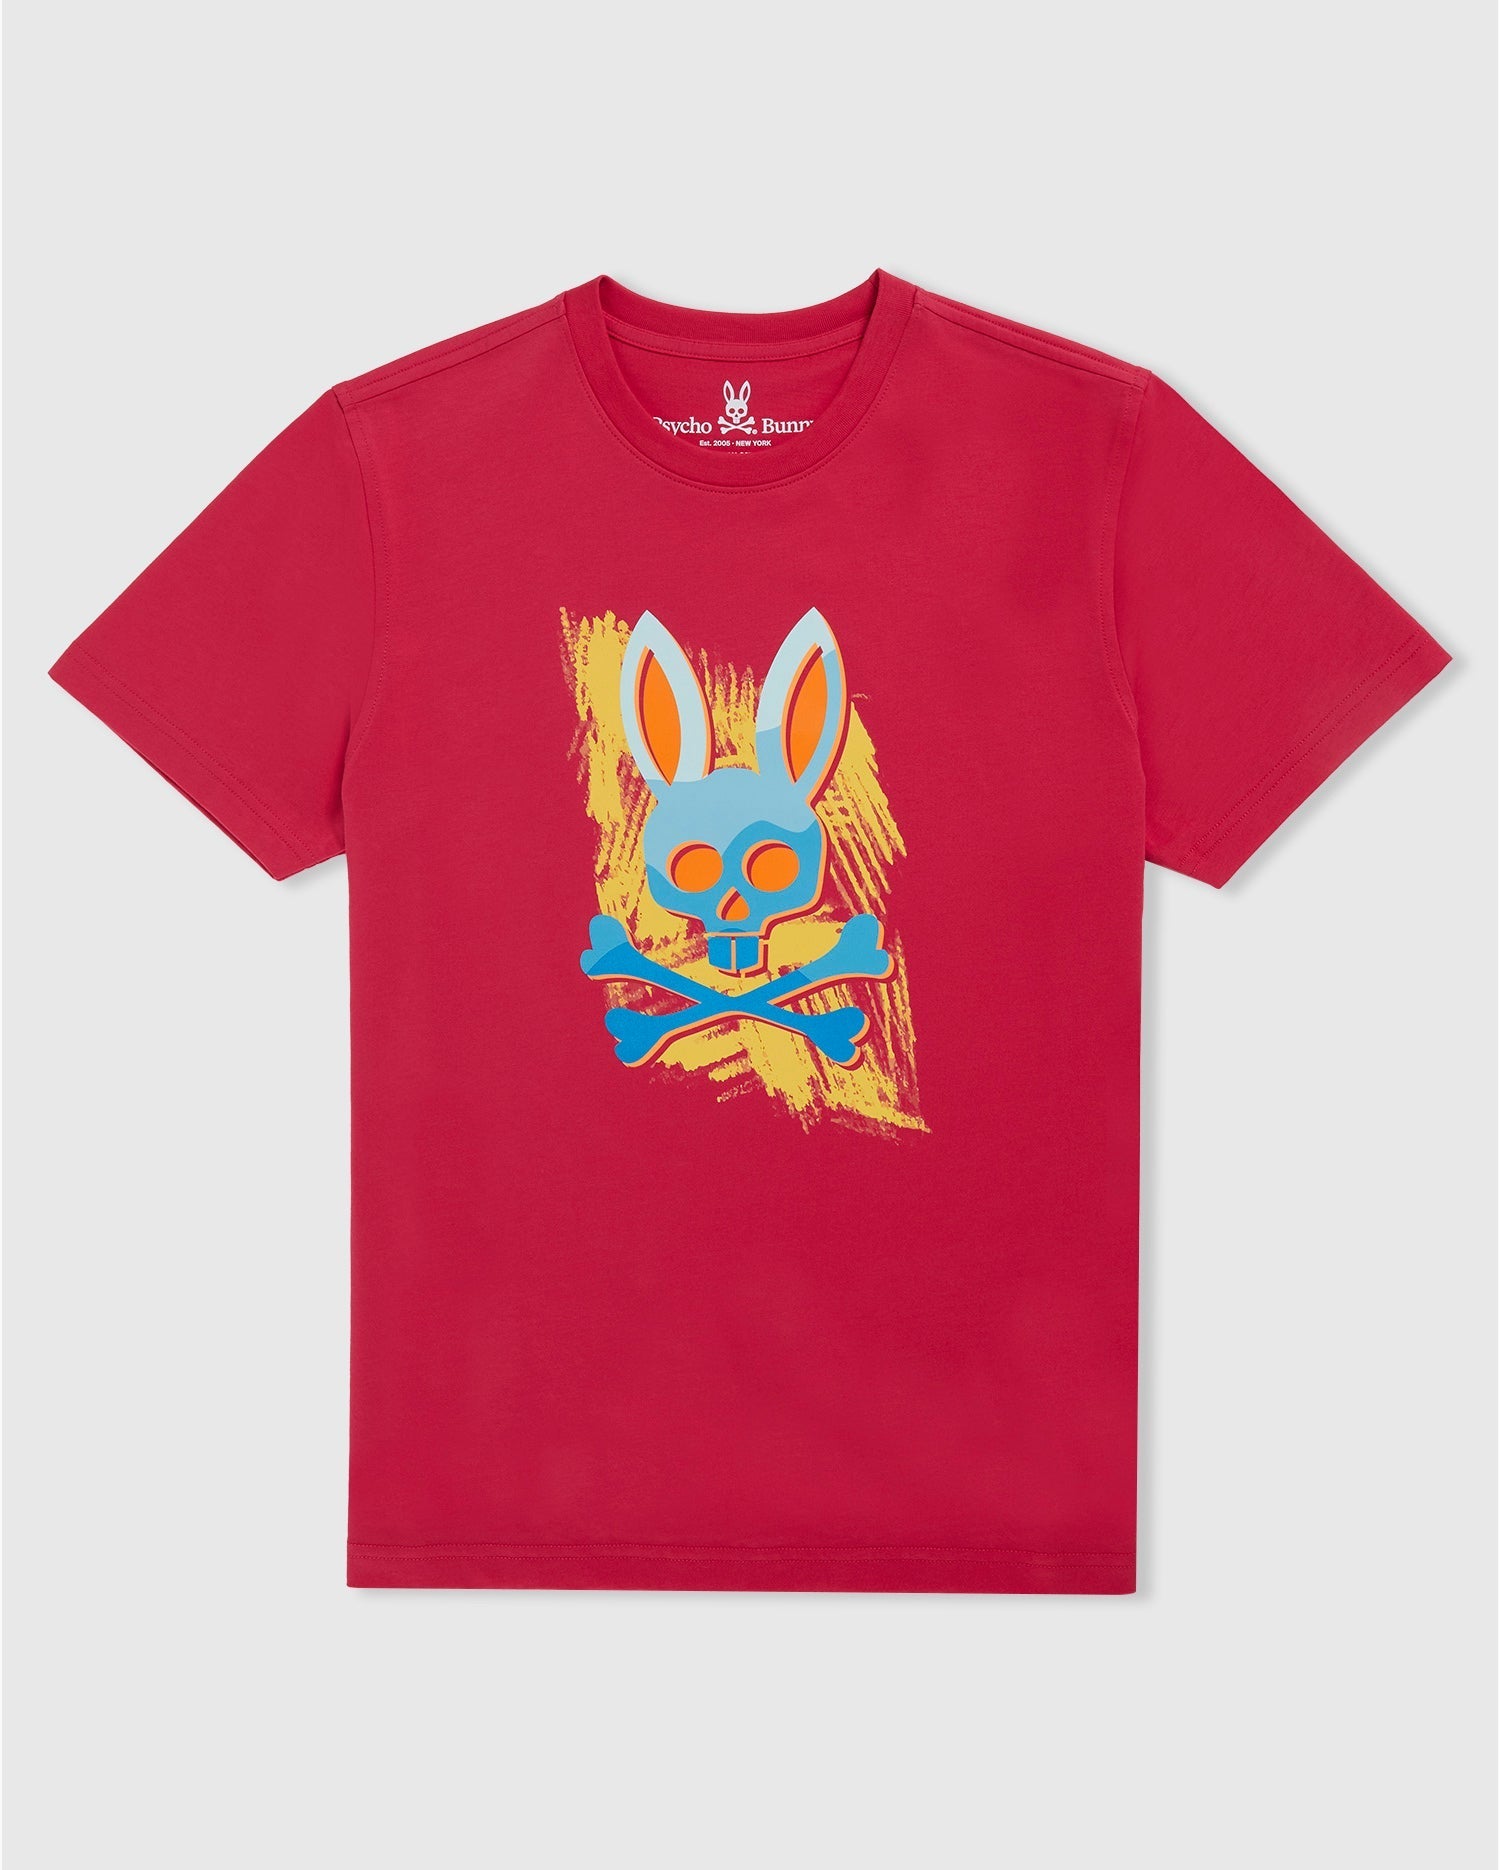 Psycho Bunny Graphic Tee - Surreal